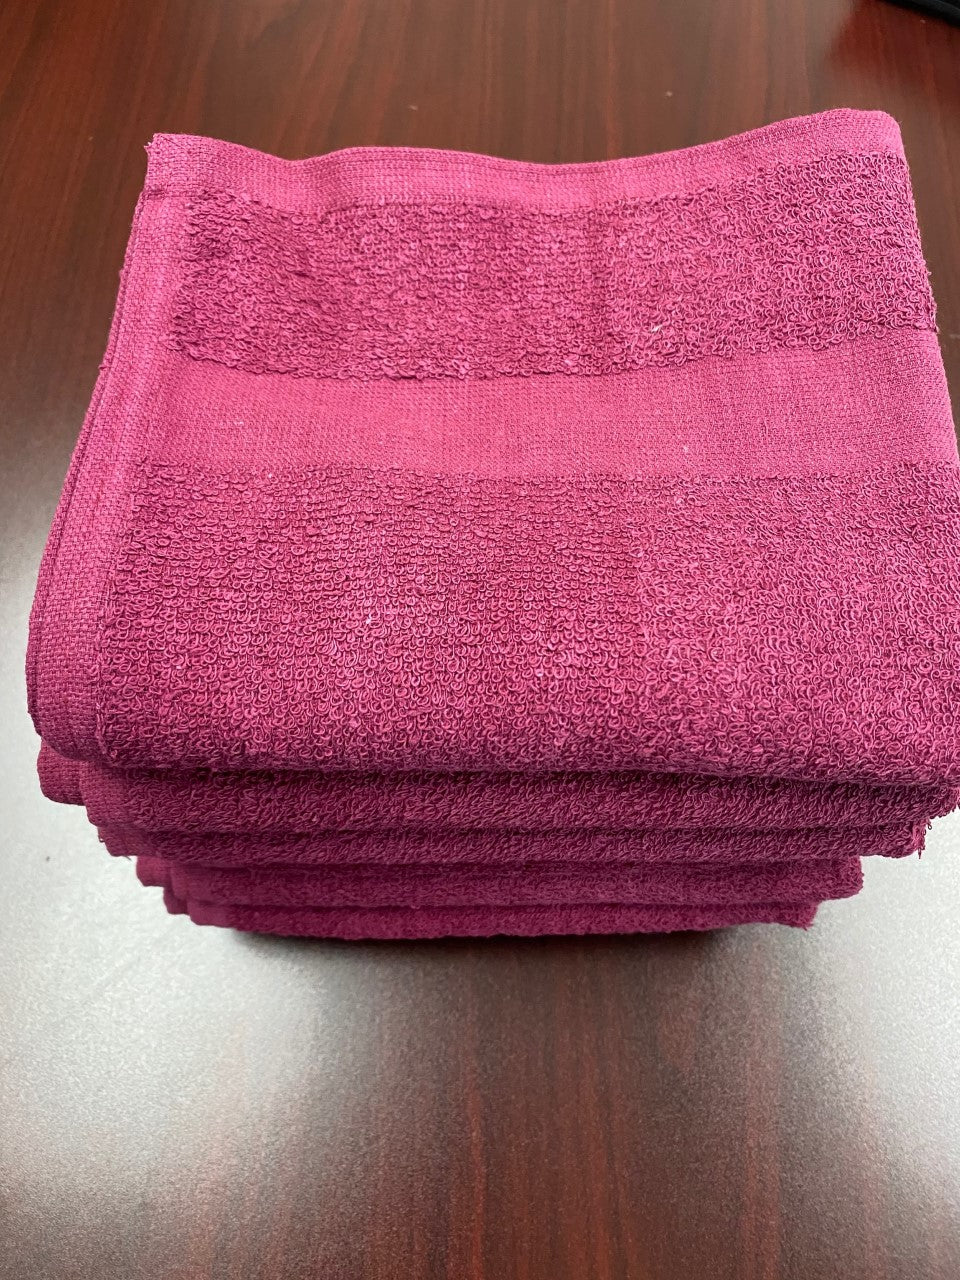 12 Pack 16”x28” Bleach Proof Hand Towel 3 lb Burgundy – Towels N More